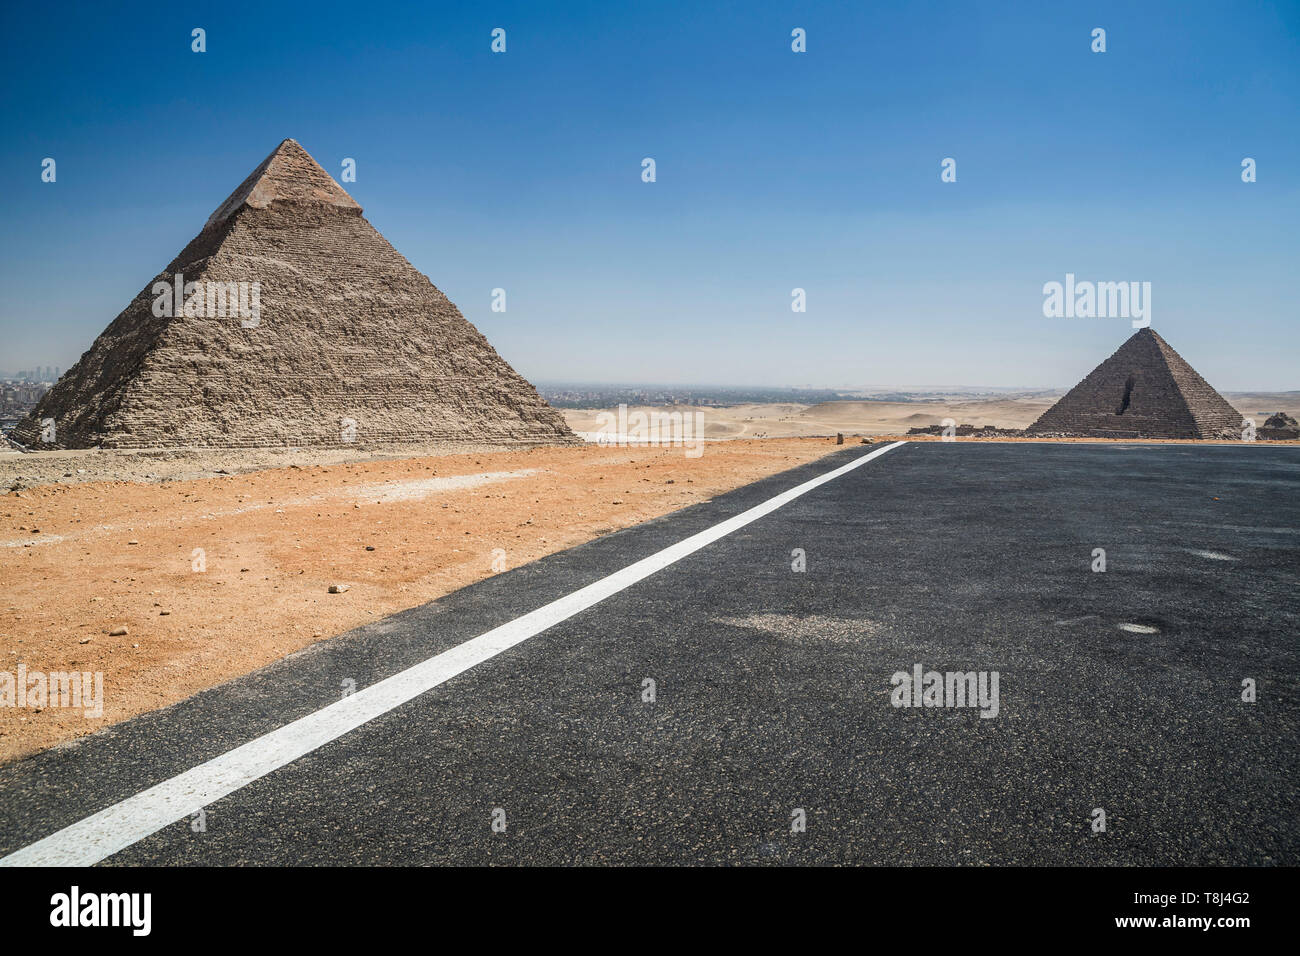 Heliport near the pyramids, Giza Plateau near Cairo, Egypt Stock Photo